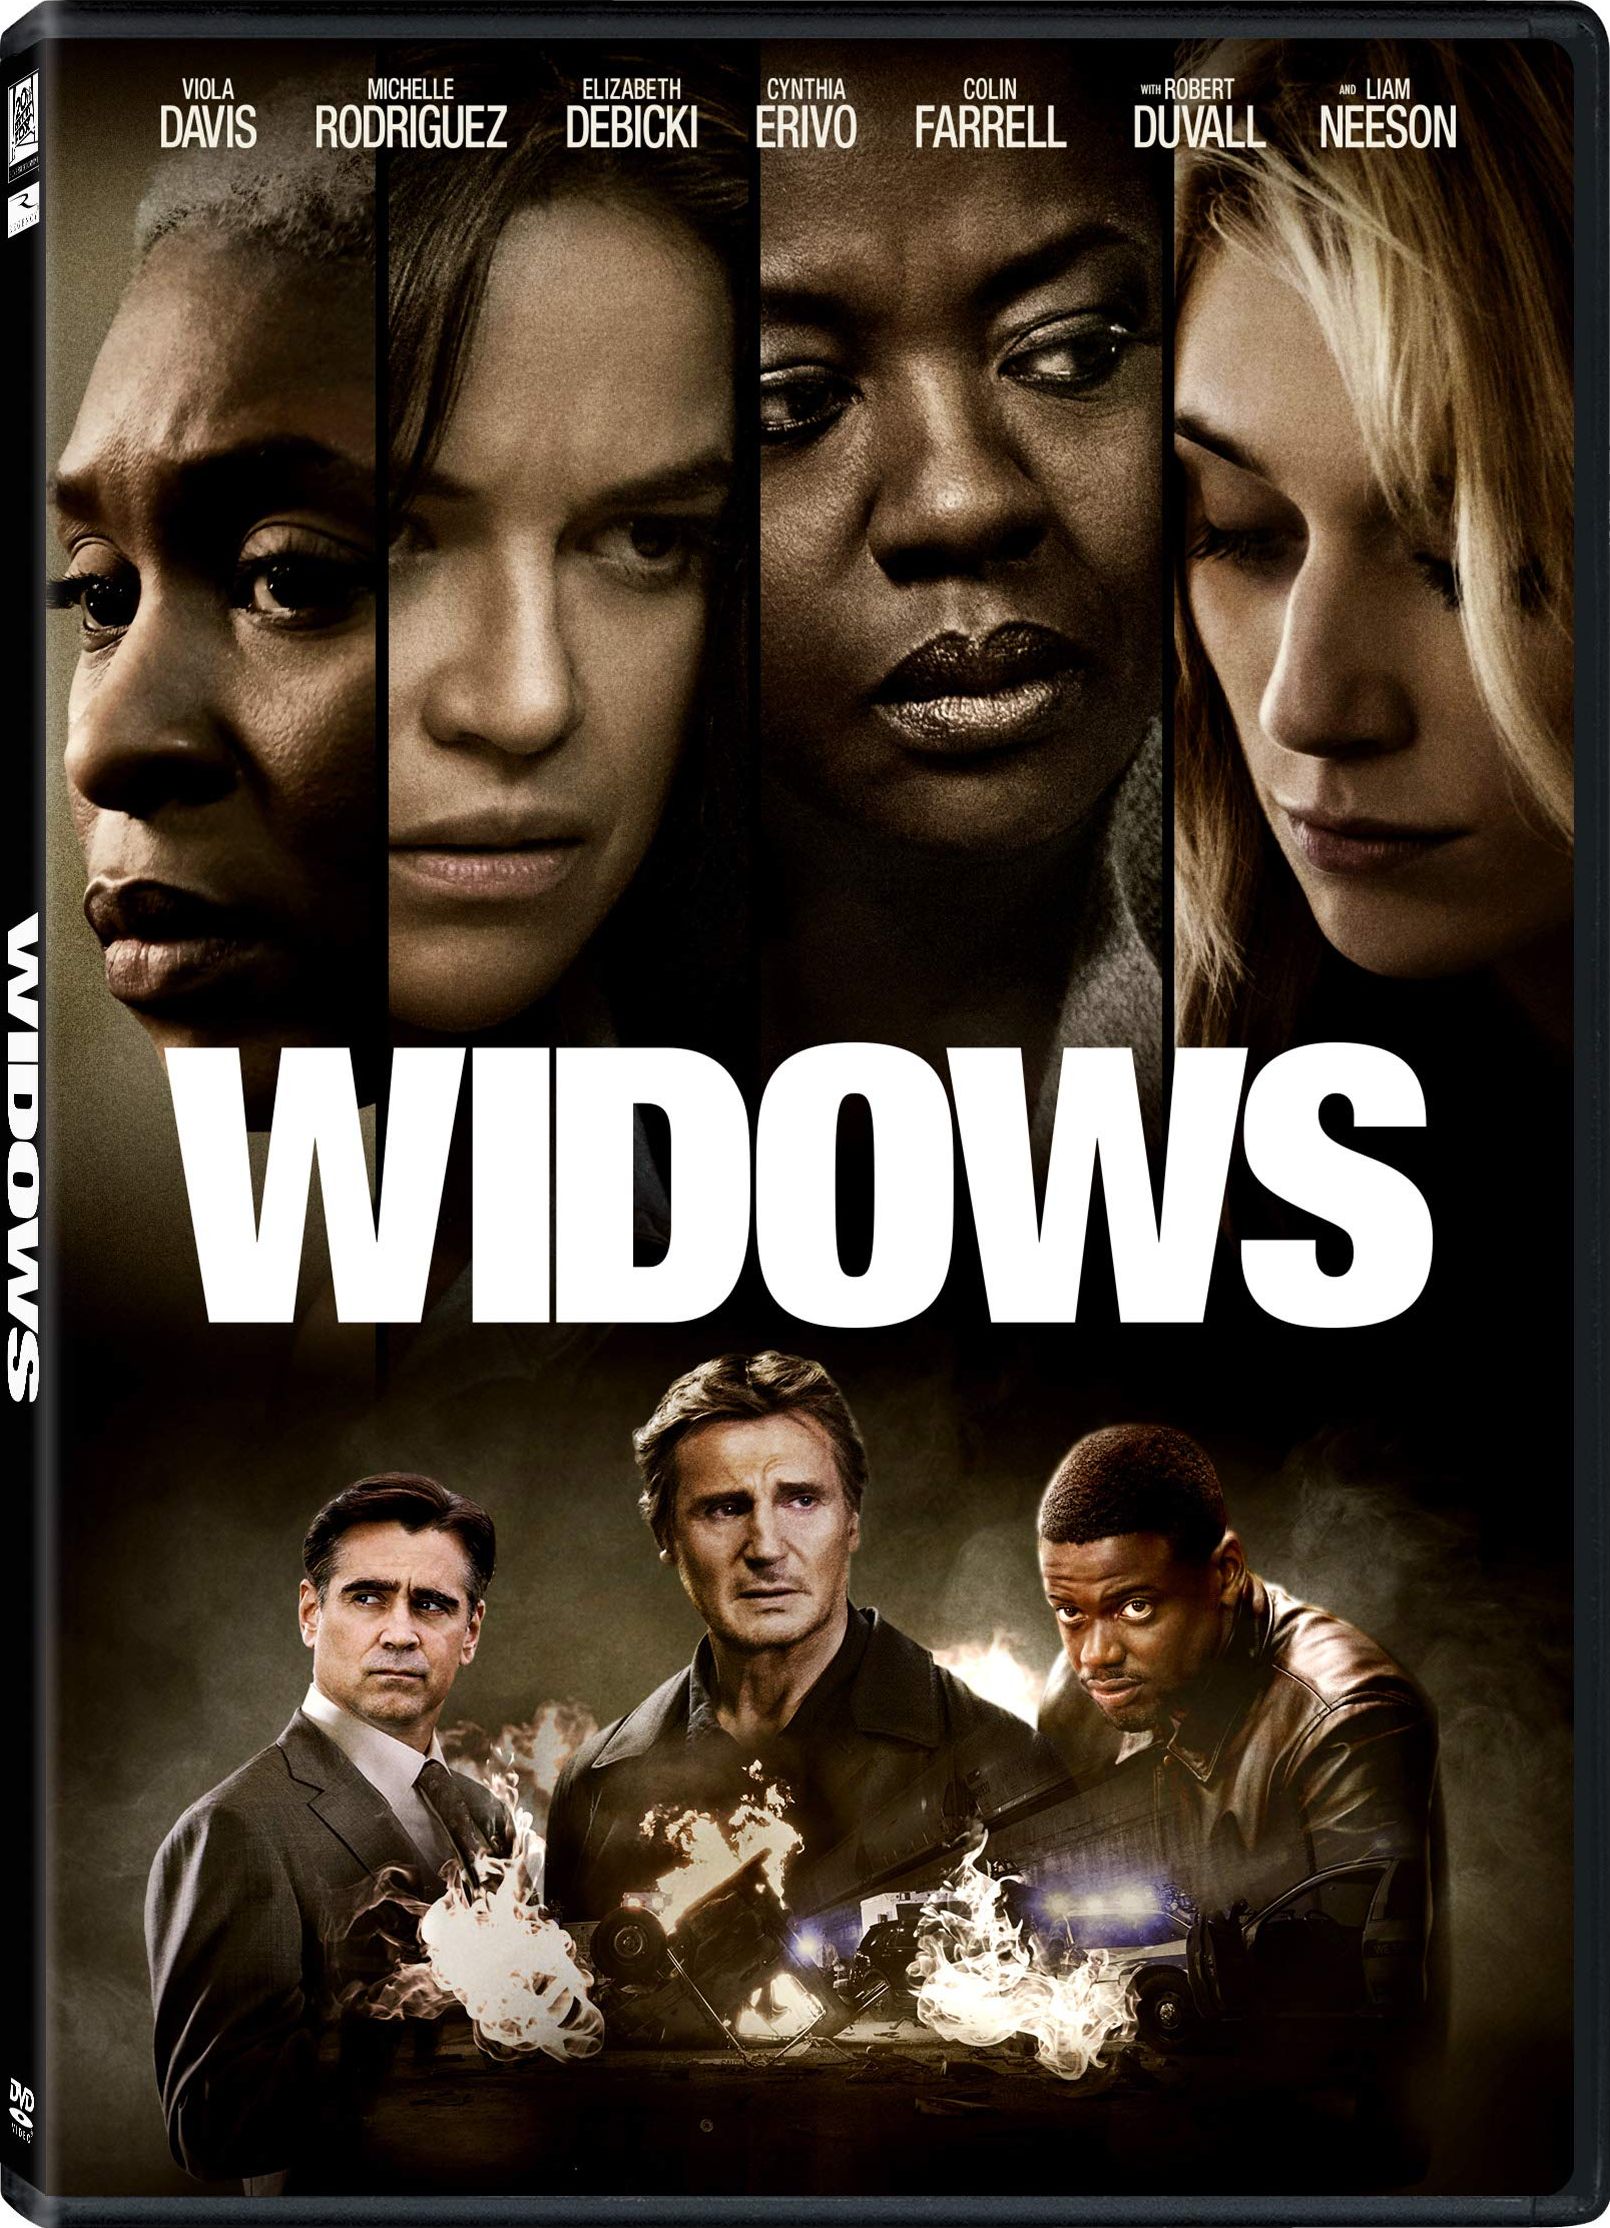 Widows DVD Release Date February 5, 2019